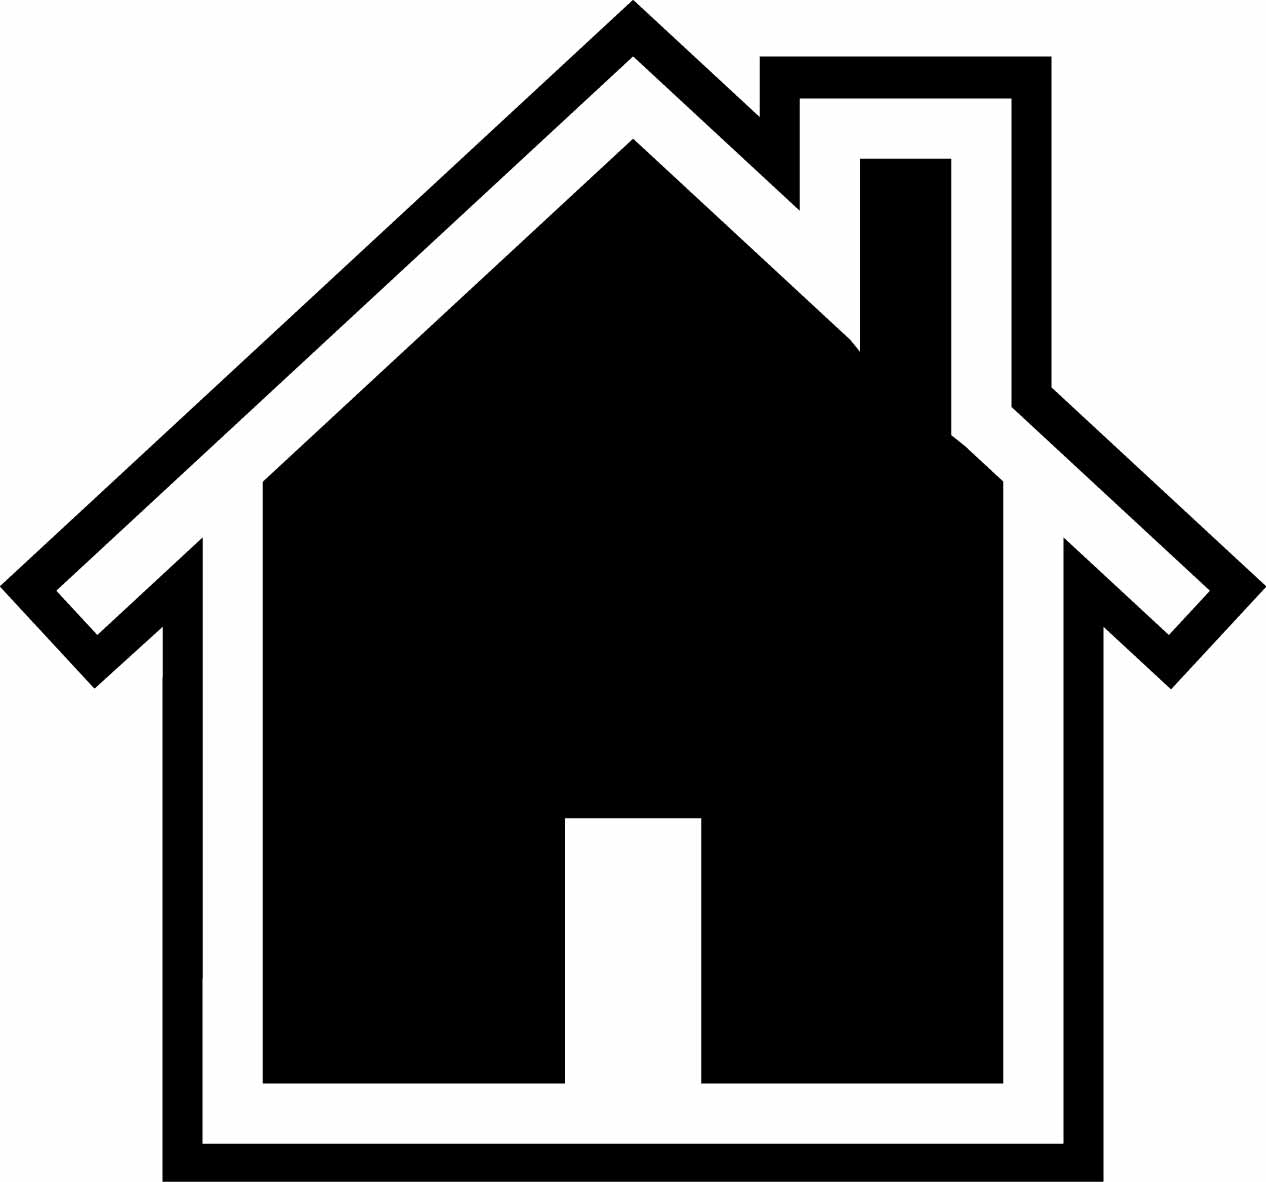 House outline logo clipart